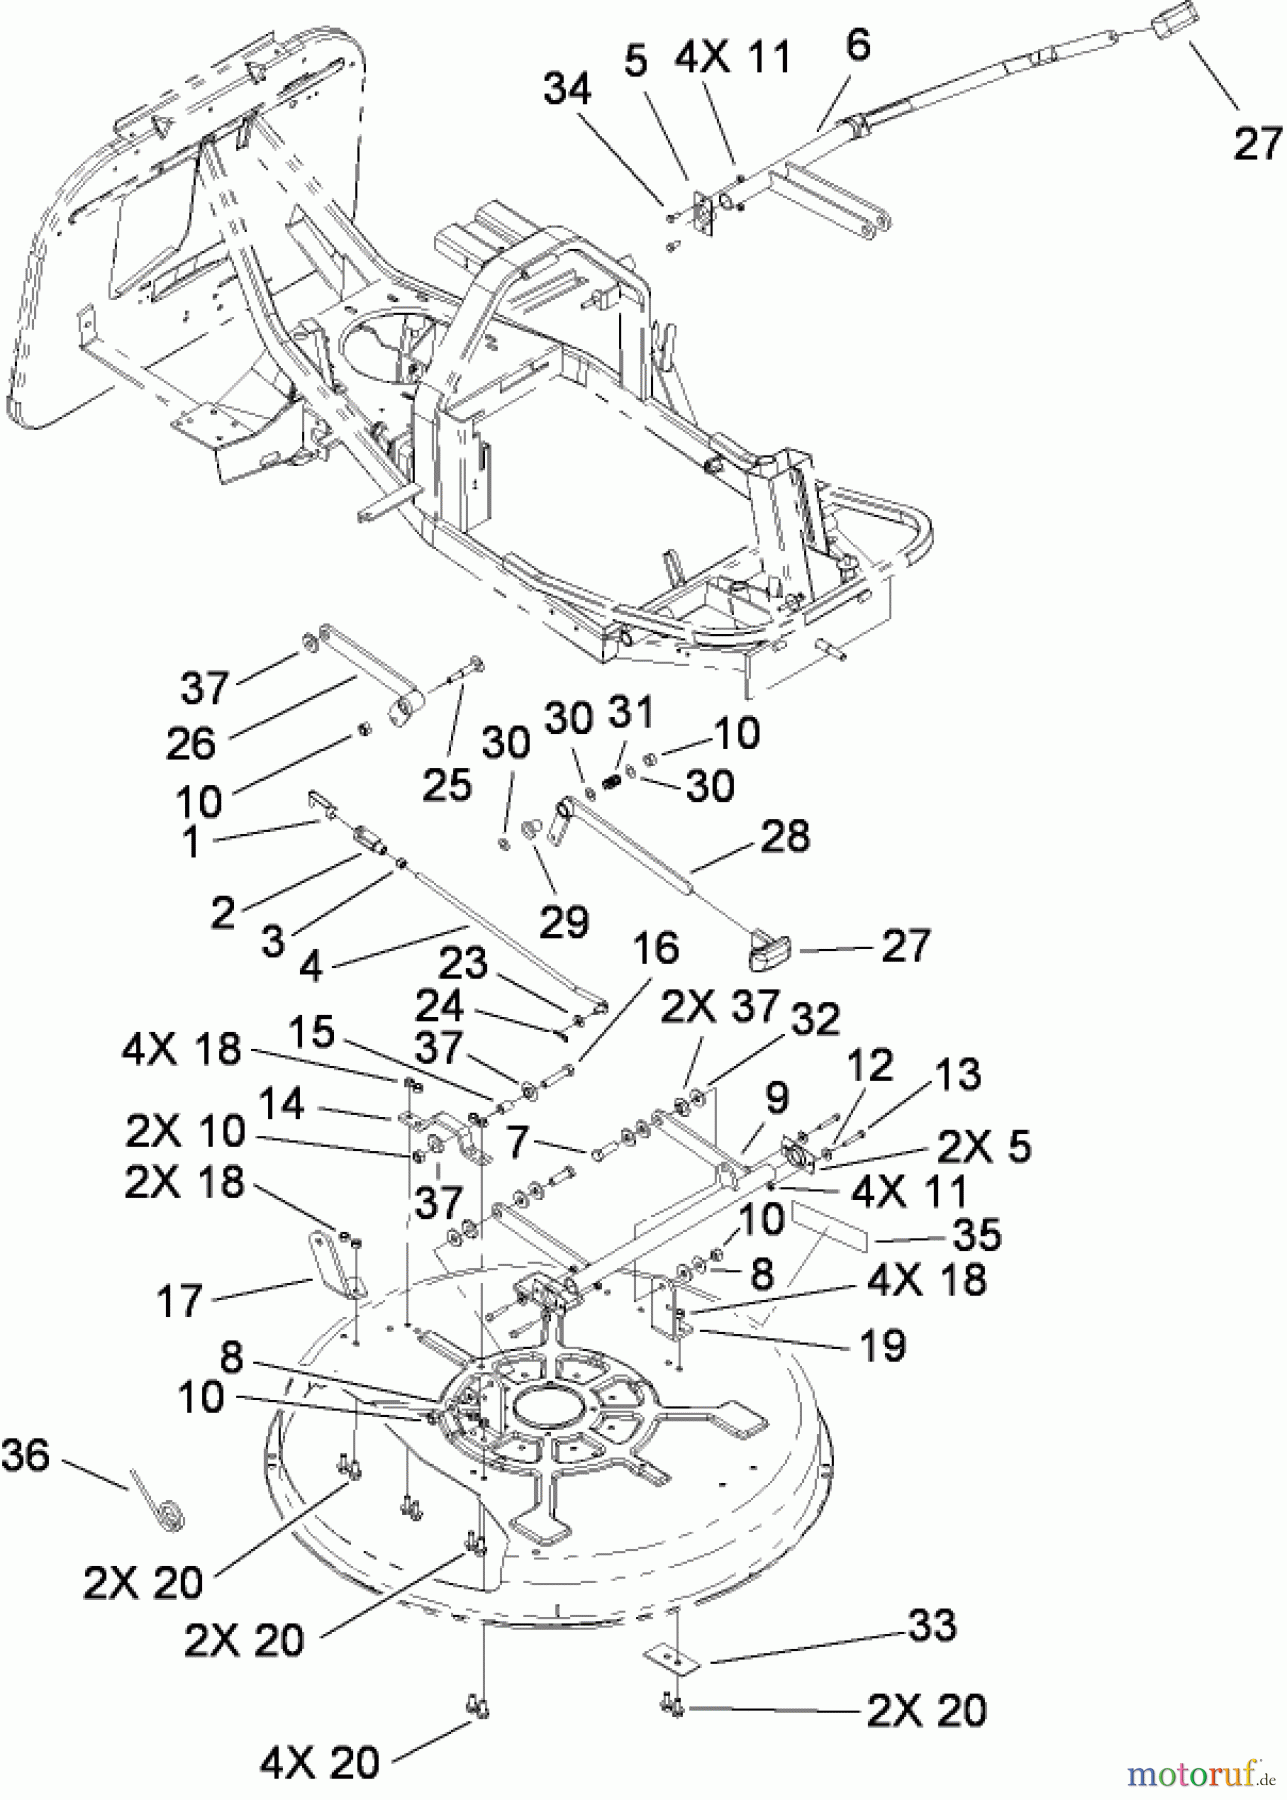  Toro Neu Mowers, Rear-Engine Rider 70186 (H132) - Toro H132 Rear-Engine Riding Mower, 2007 (260732867-270805635) DECK SUSPENSION ASSEMBLY